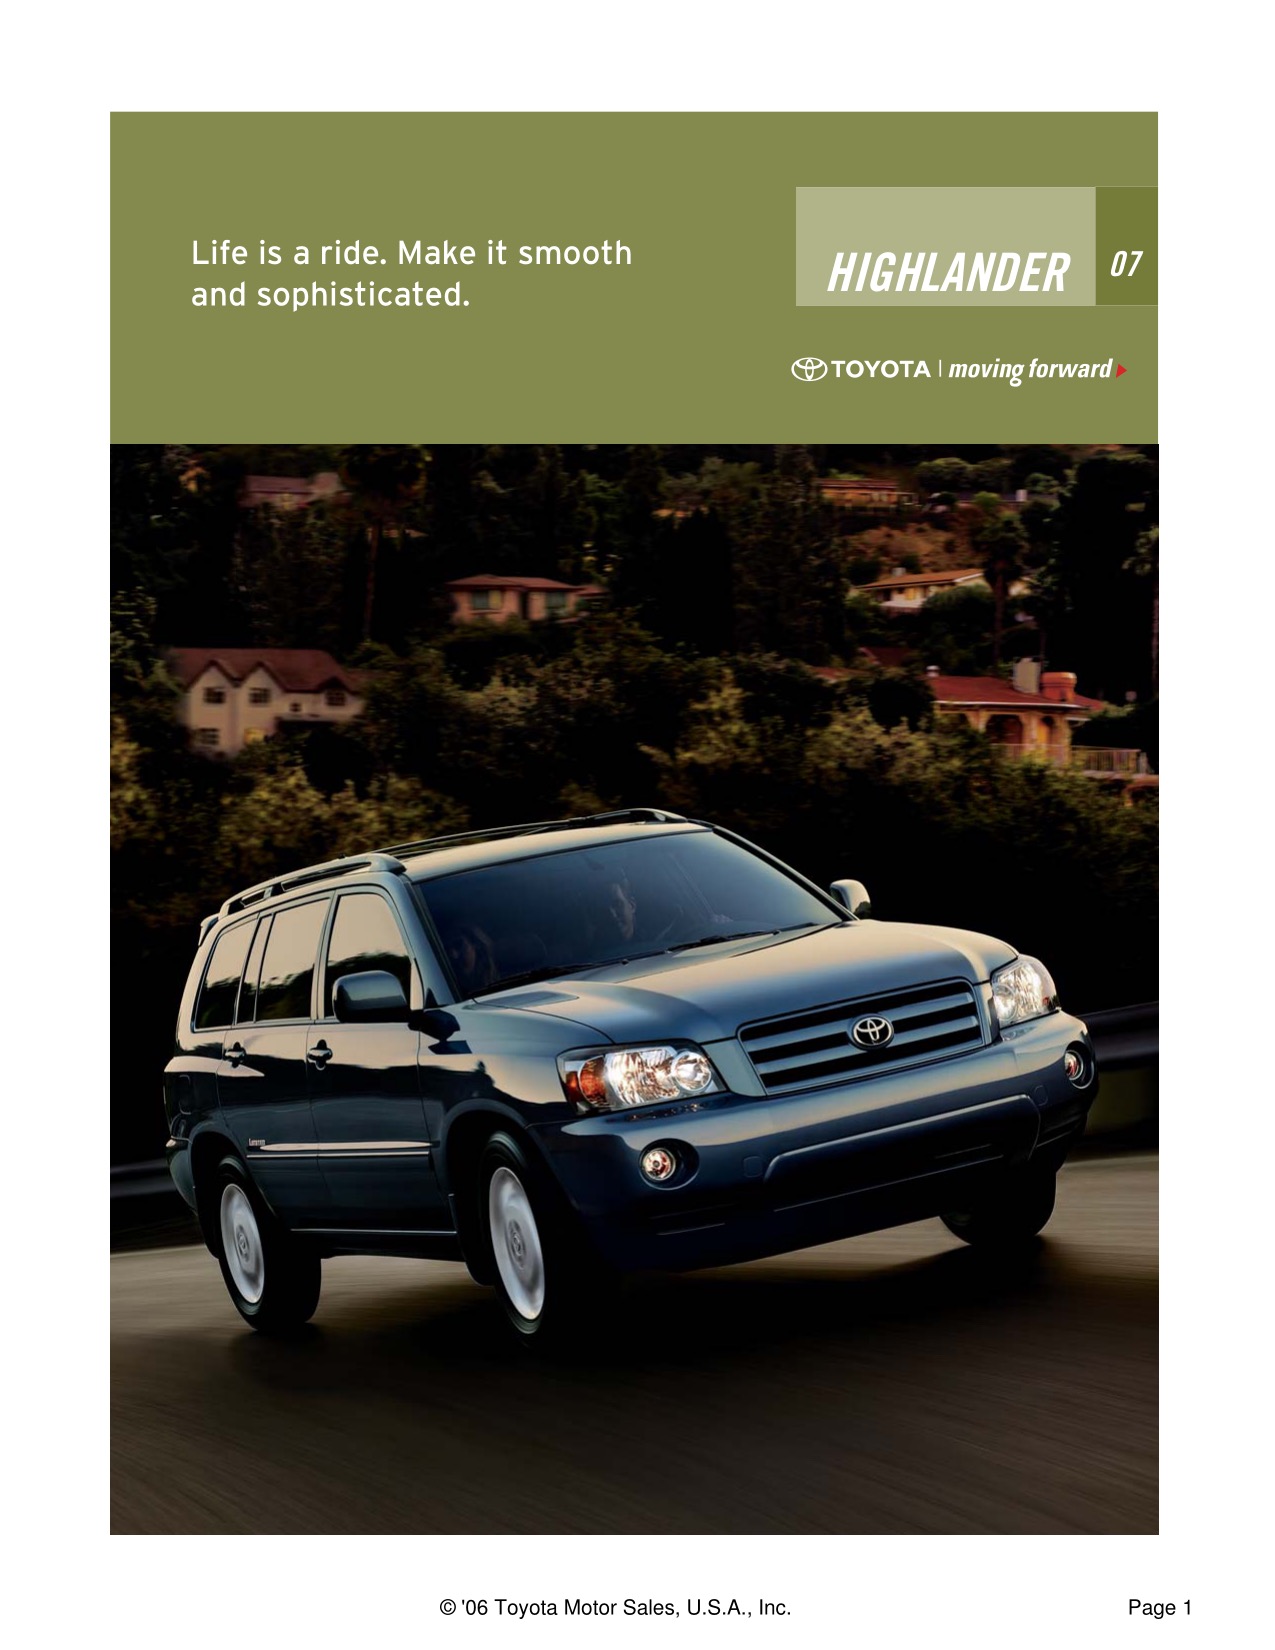 2007 Toyota Highlander Brochure